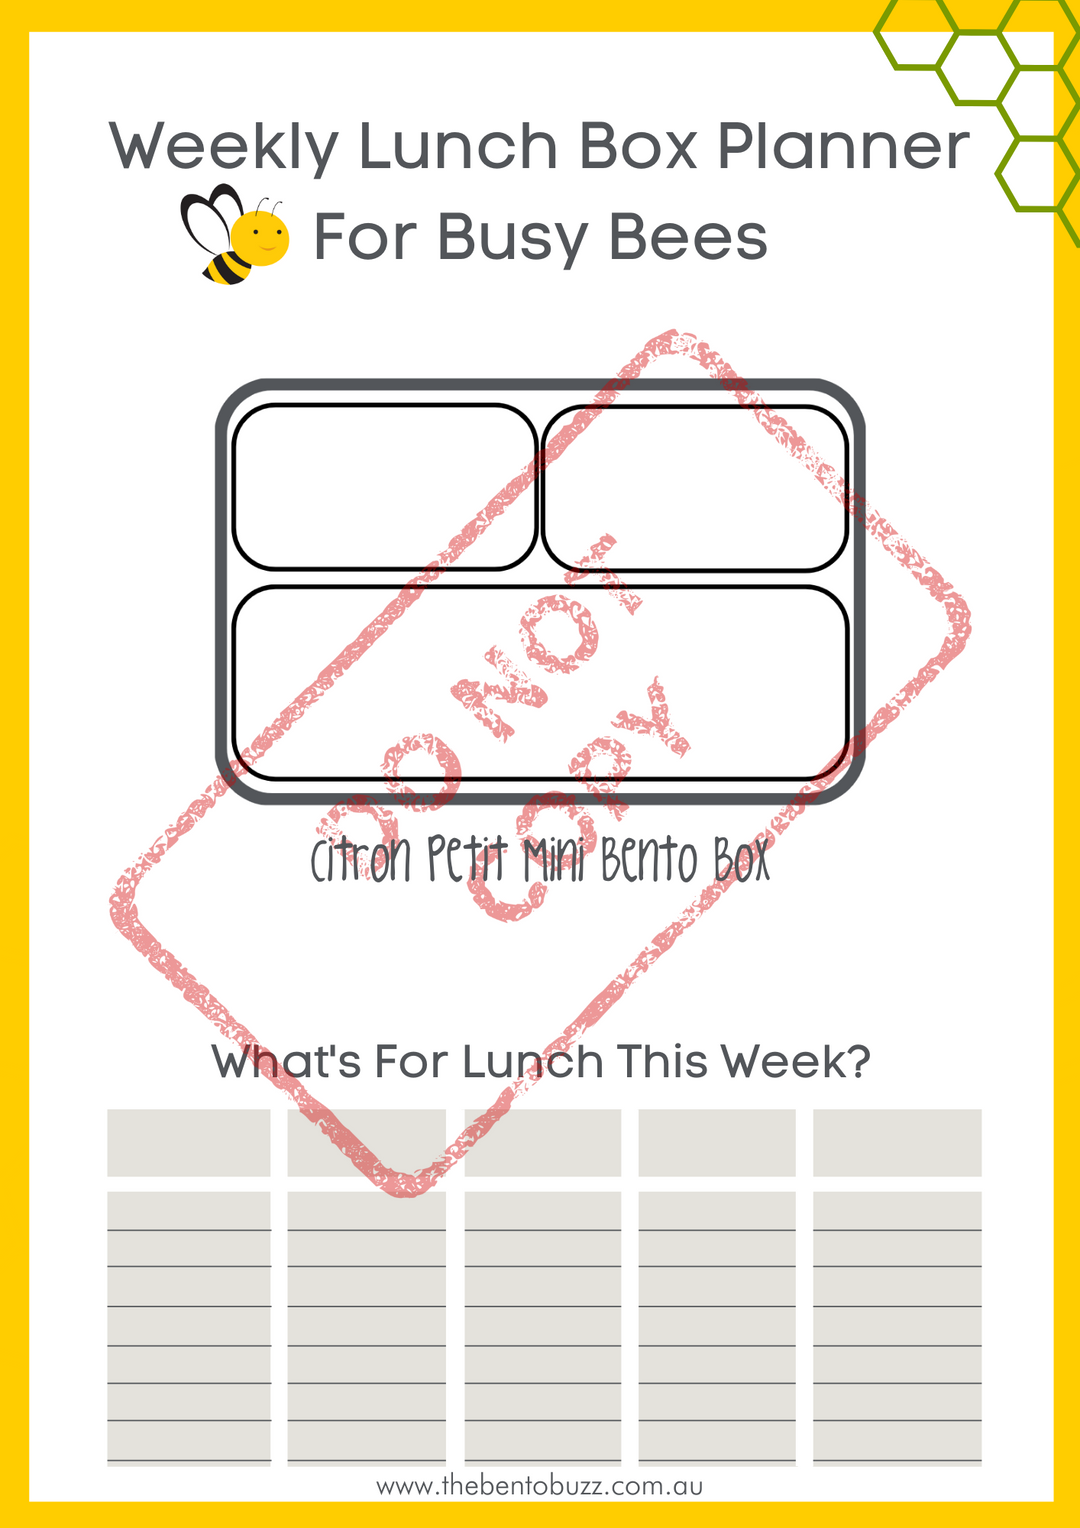 Download & Print Lunch Box Planner - Citron Petit Mini